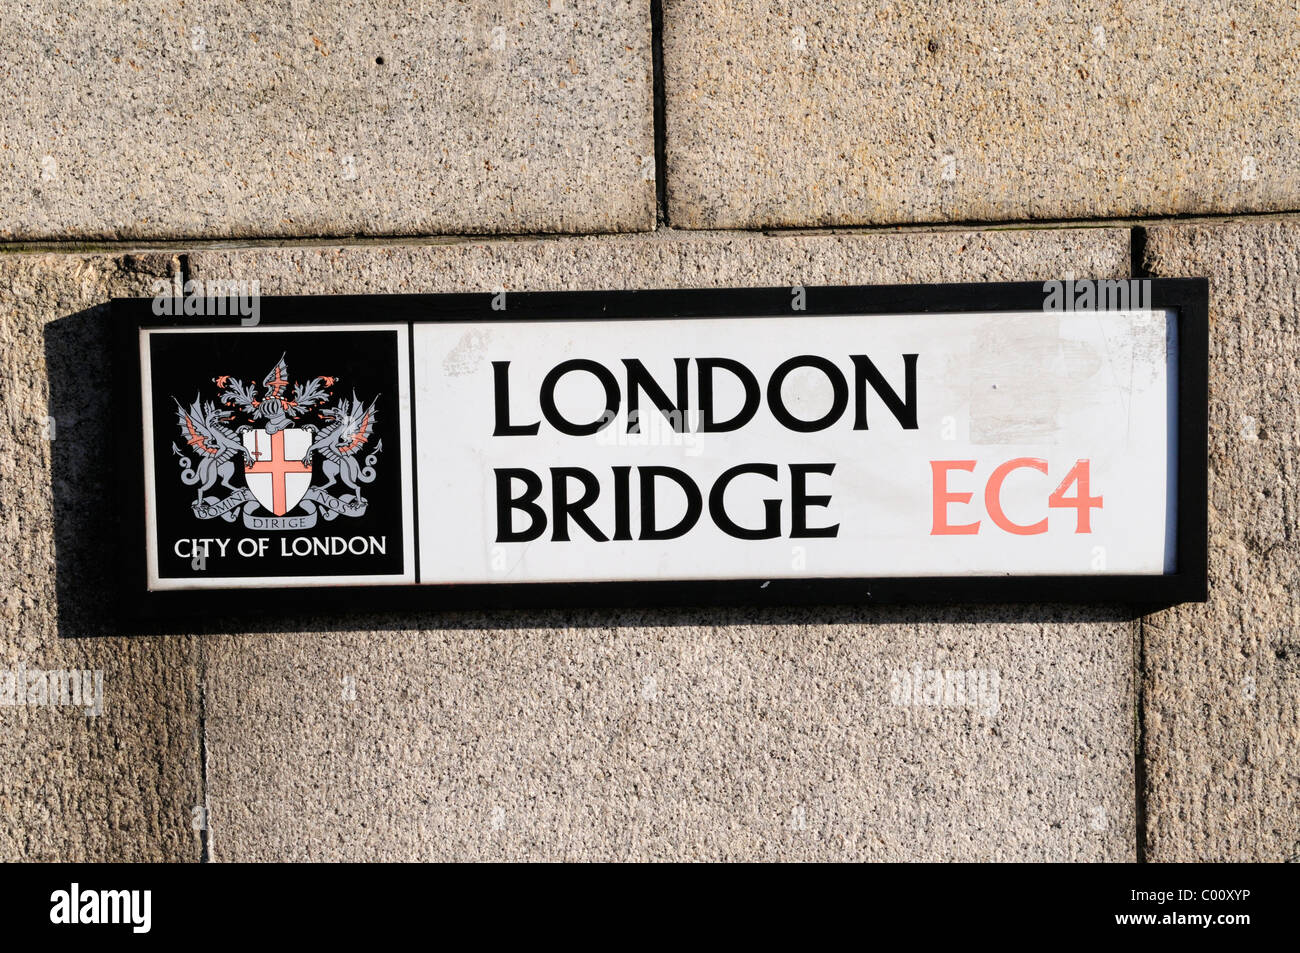 London Bridge EC4 Street Sign, London, England, UK Stock Photo